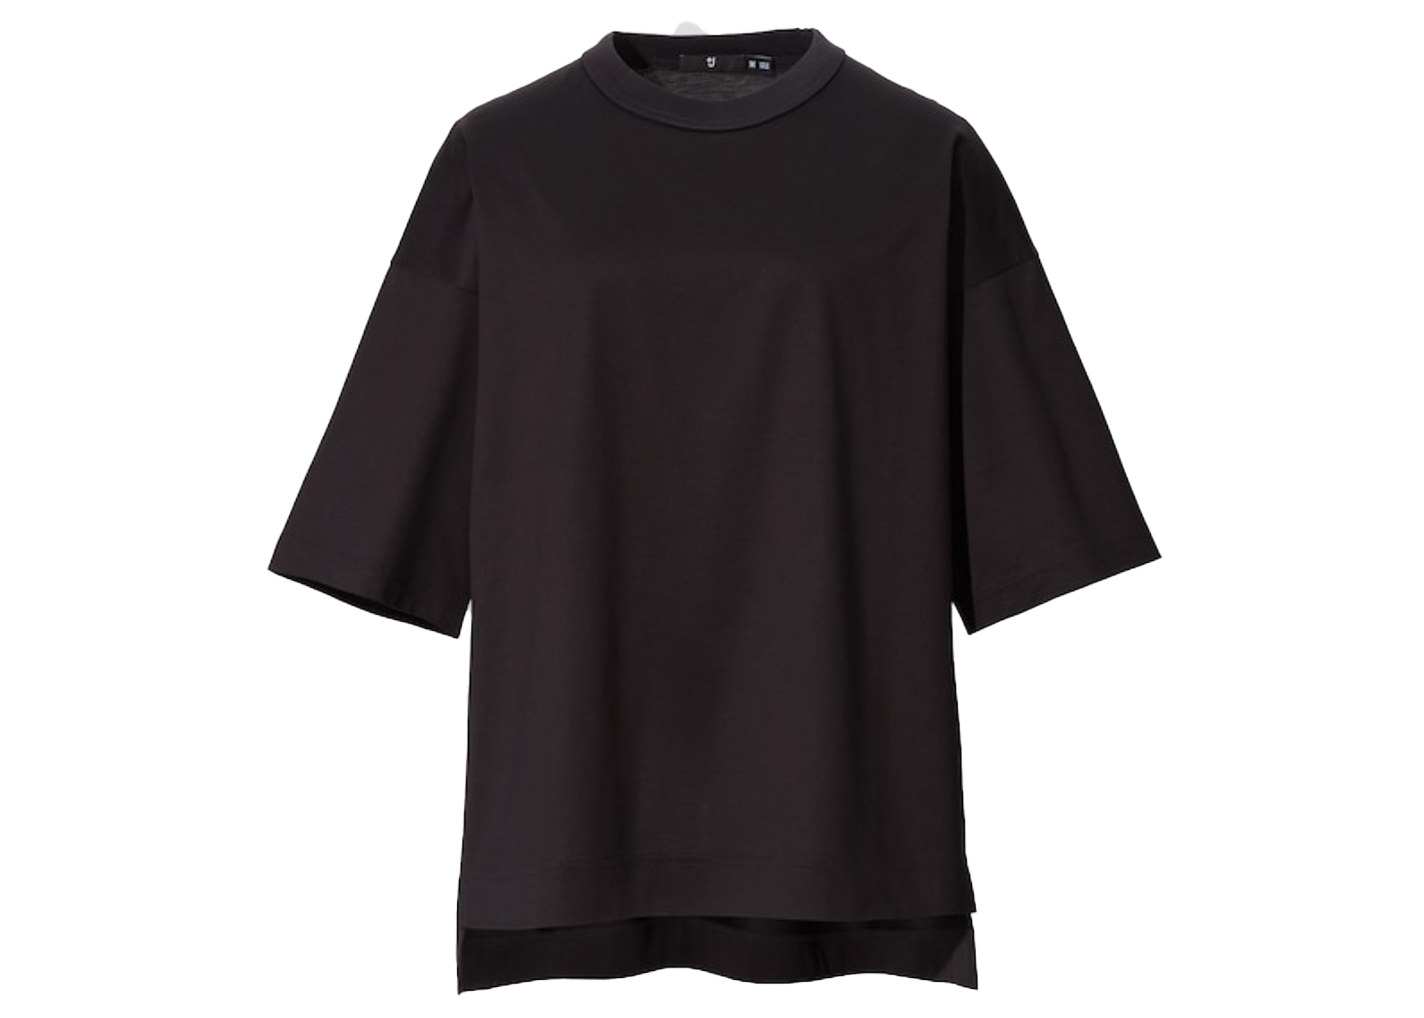 Uniqlo x Jil Sander Womens Oversized Half Sleeve T-shirt Black 